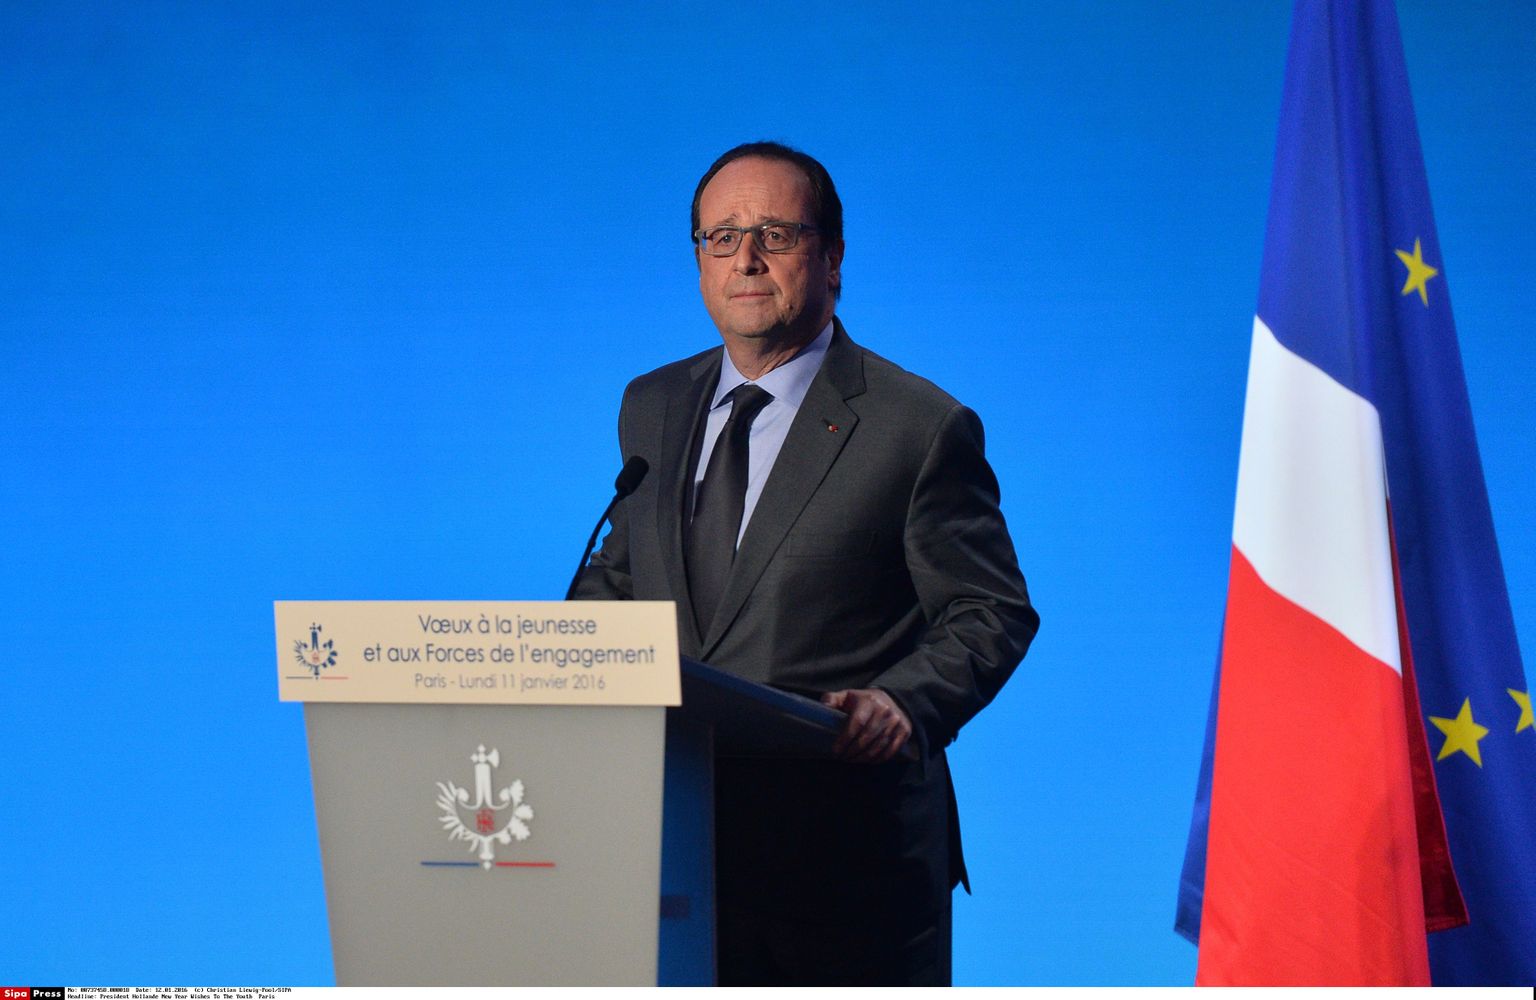 Prantsuse president Francois Hollande